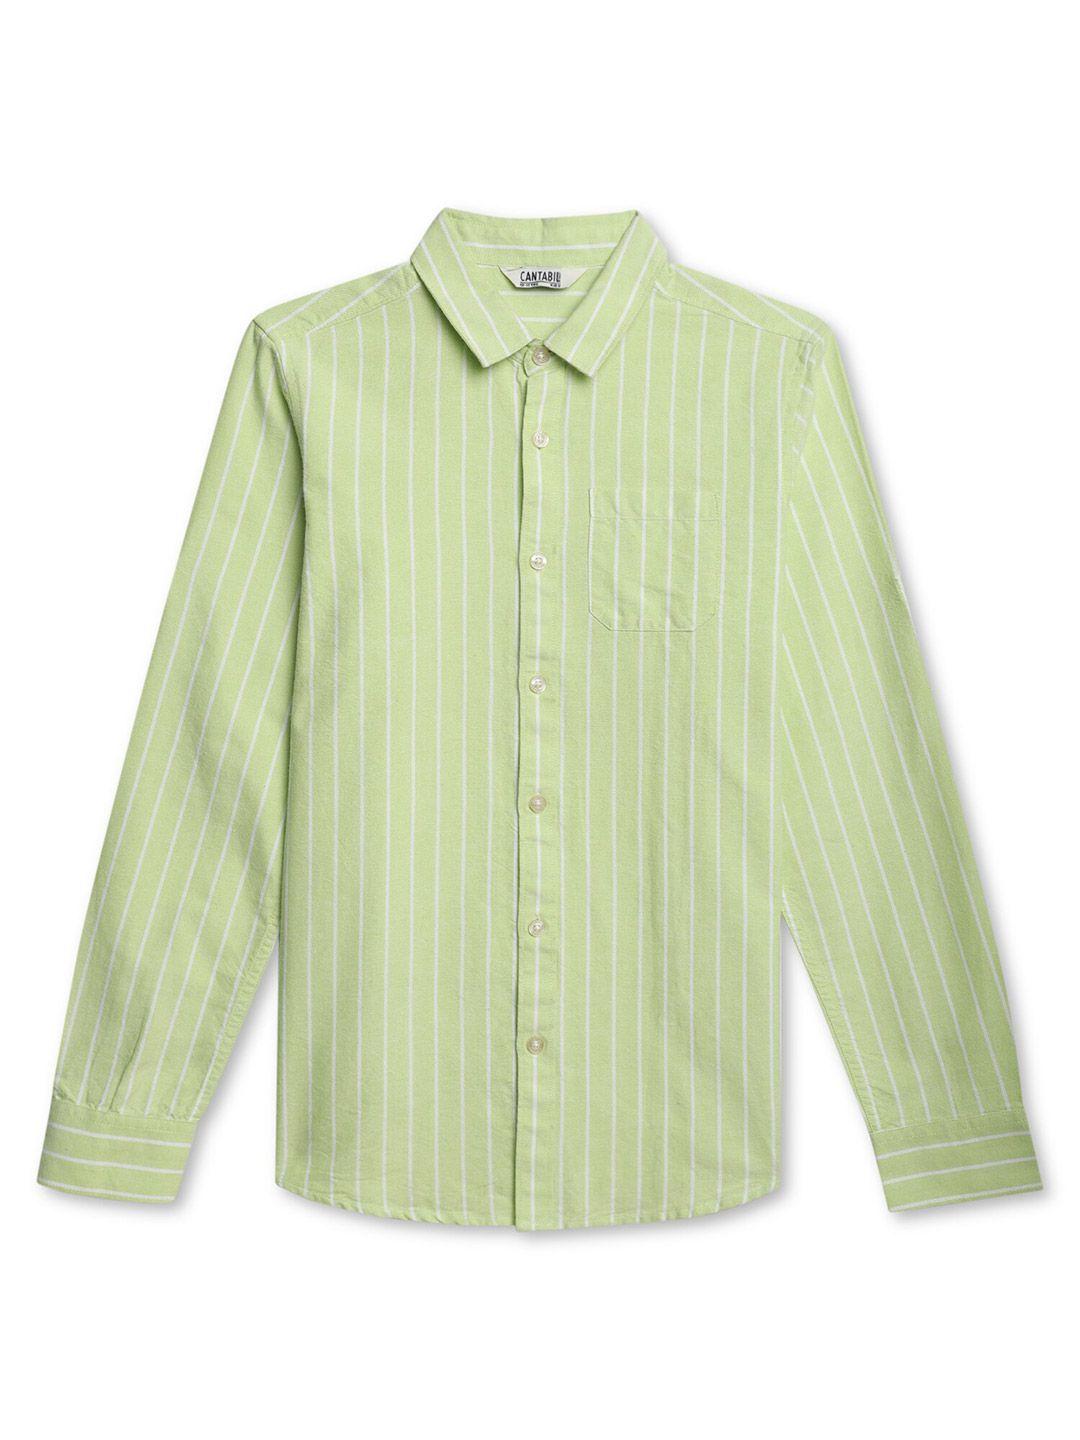 cantabil boys vertical striped cotton casual shirt